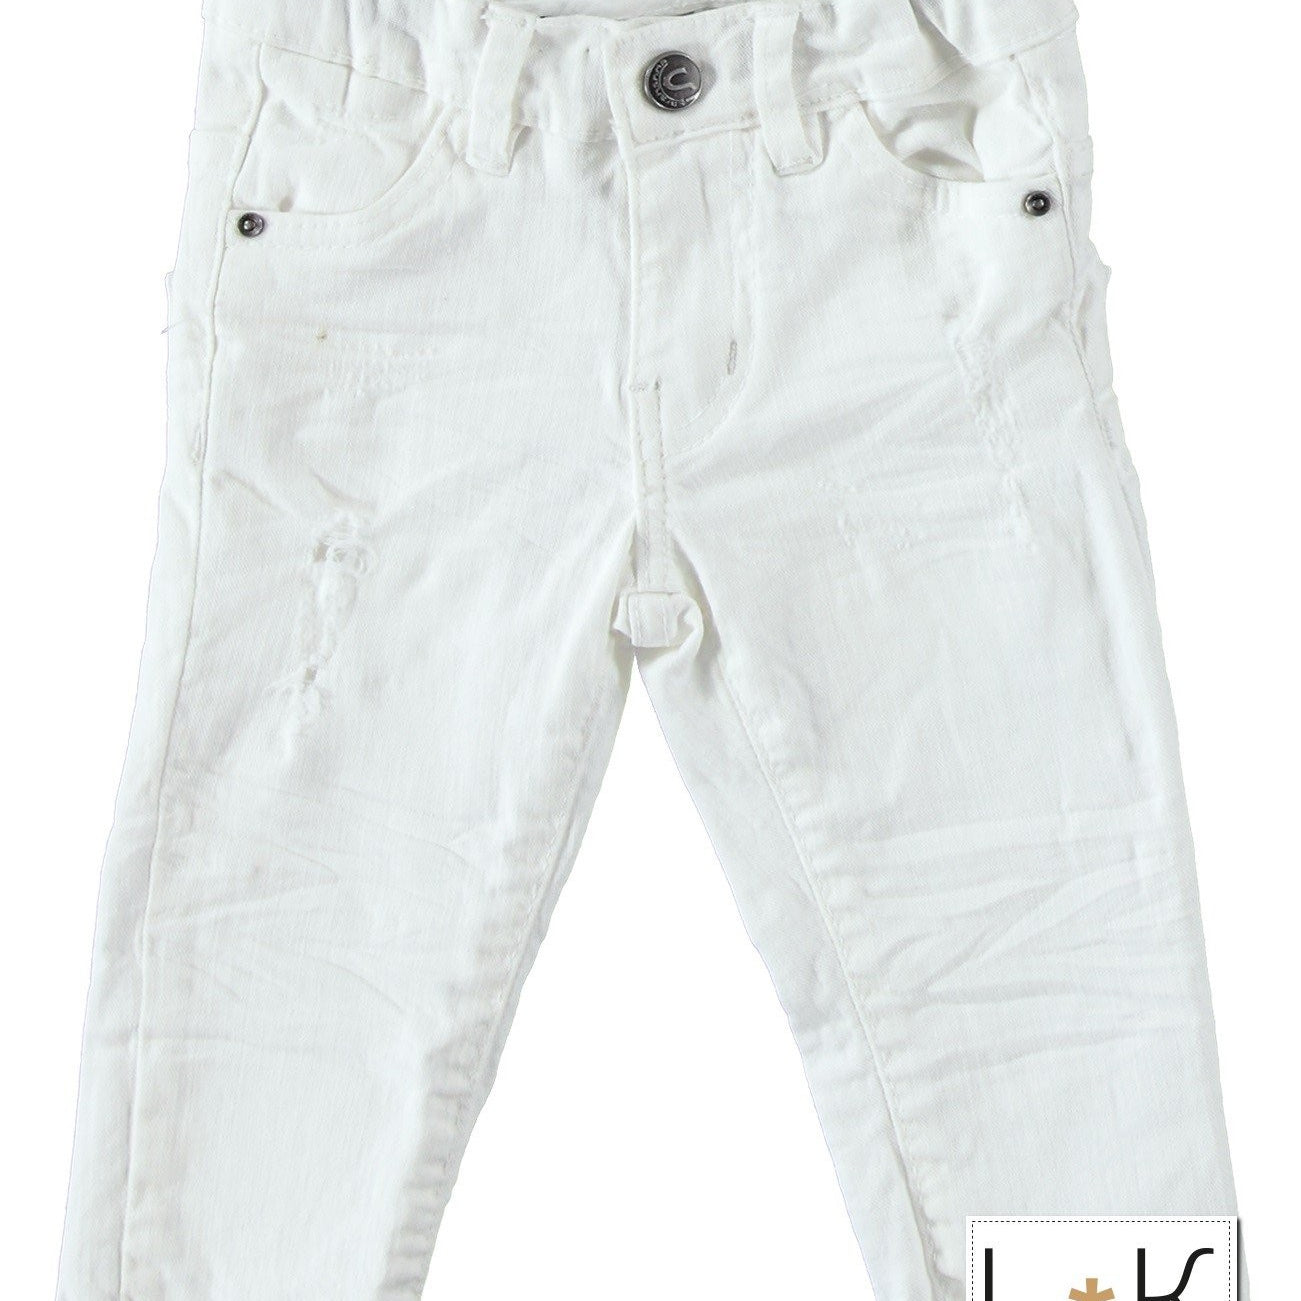 Pantalone Effetto Jeans Slim Fit  Bianco Neonato Sarabanda U156 - SARABANDA - LuxuryKids